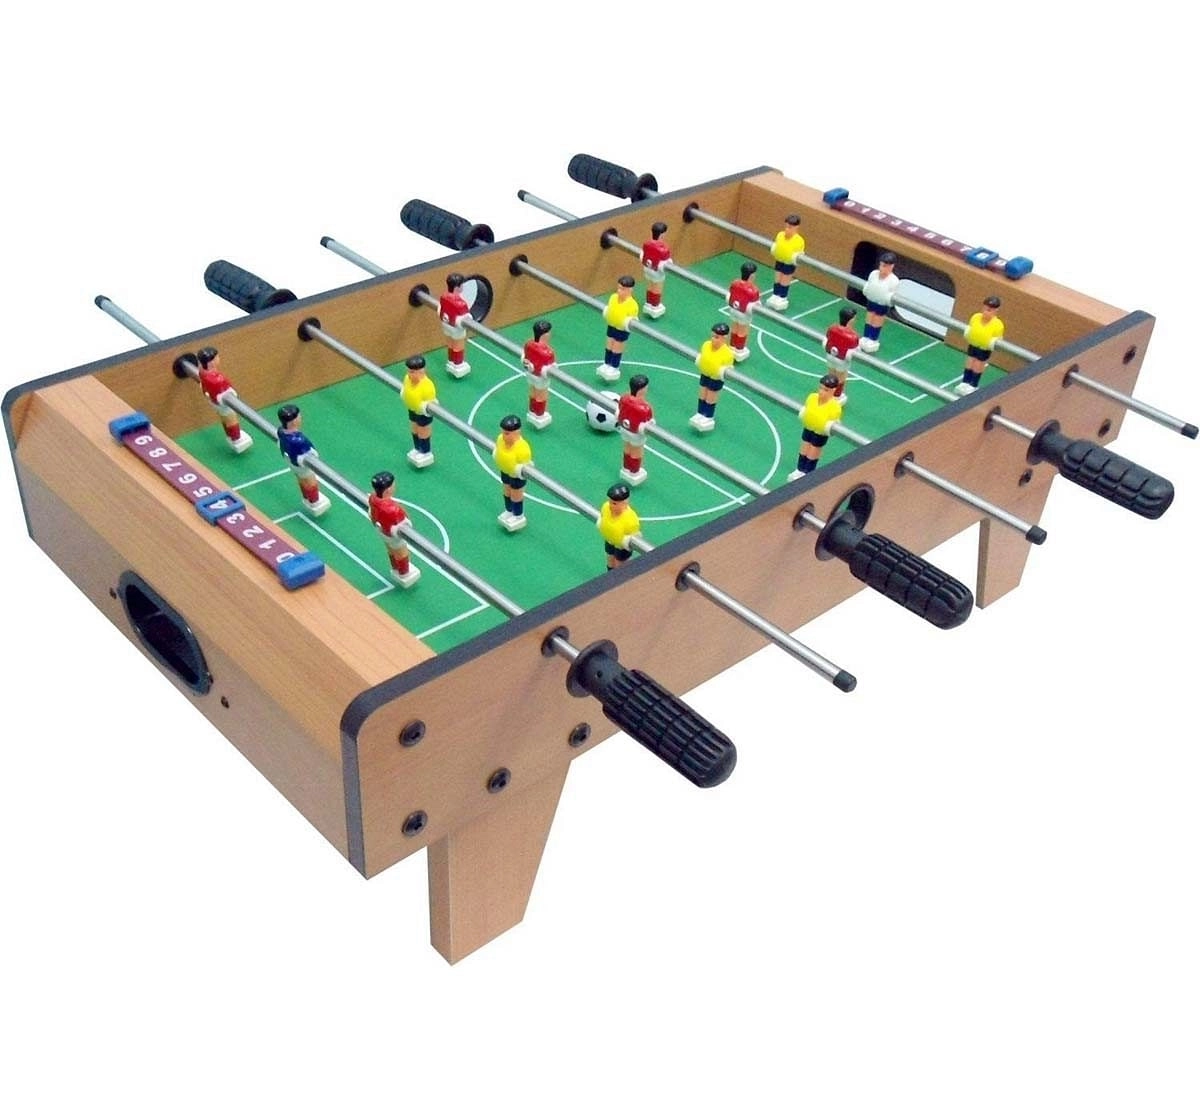 Hamleys Foosball Table Football Game 69 Cms Indoor Sports for Kids Age 3Y+